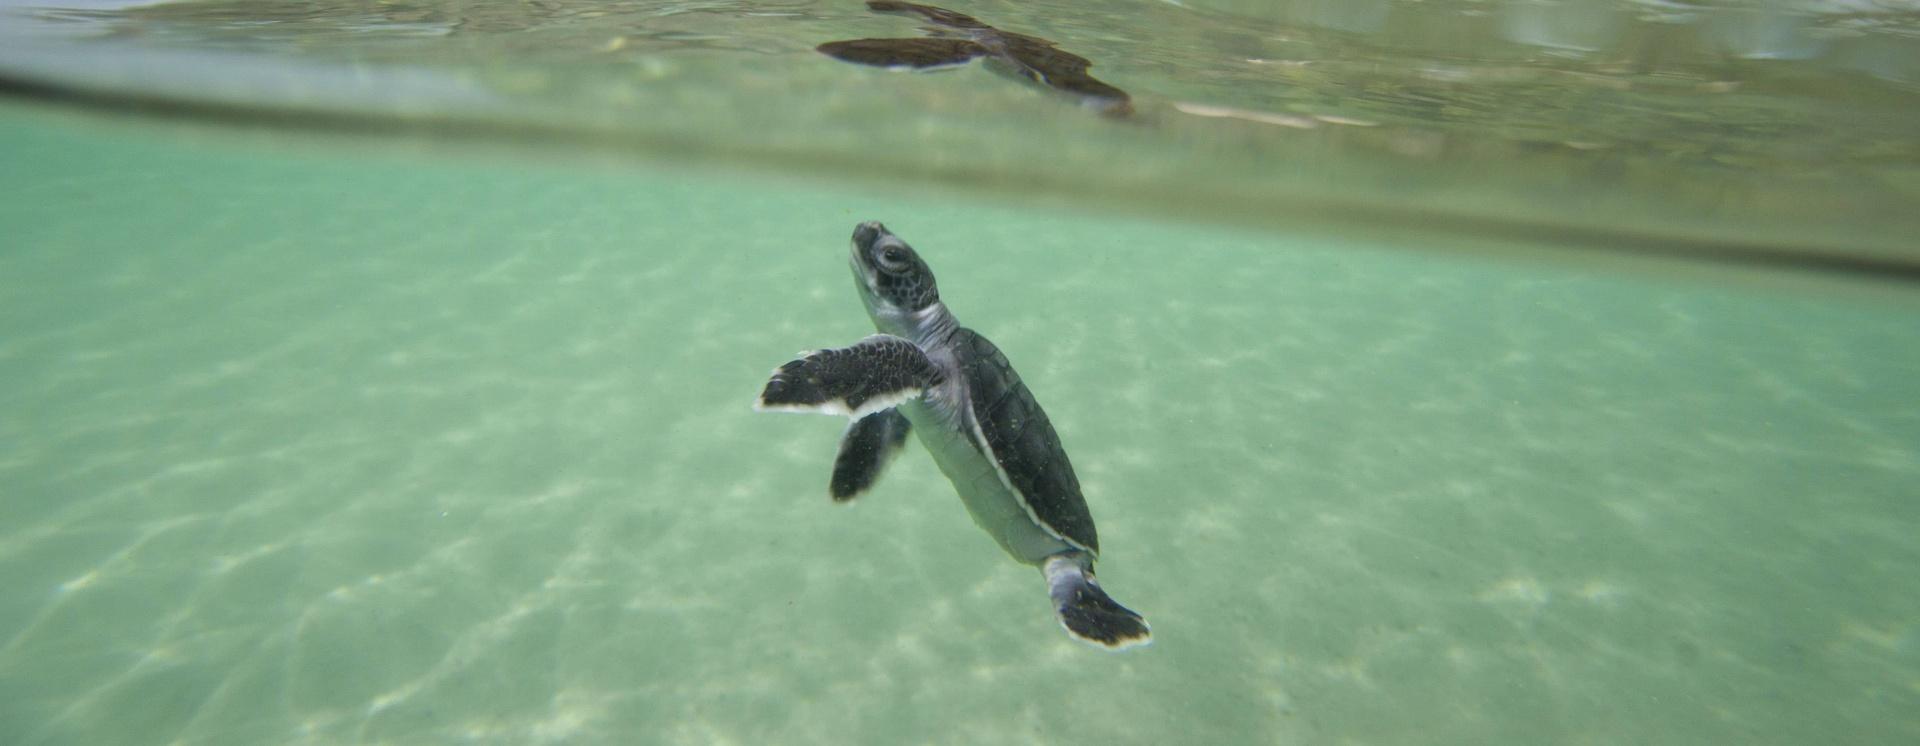 baby sea turtle underwater swimming toward surface